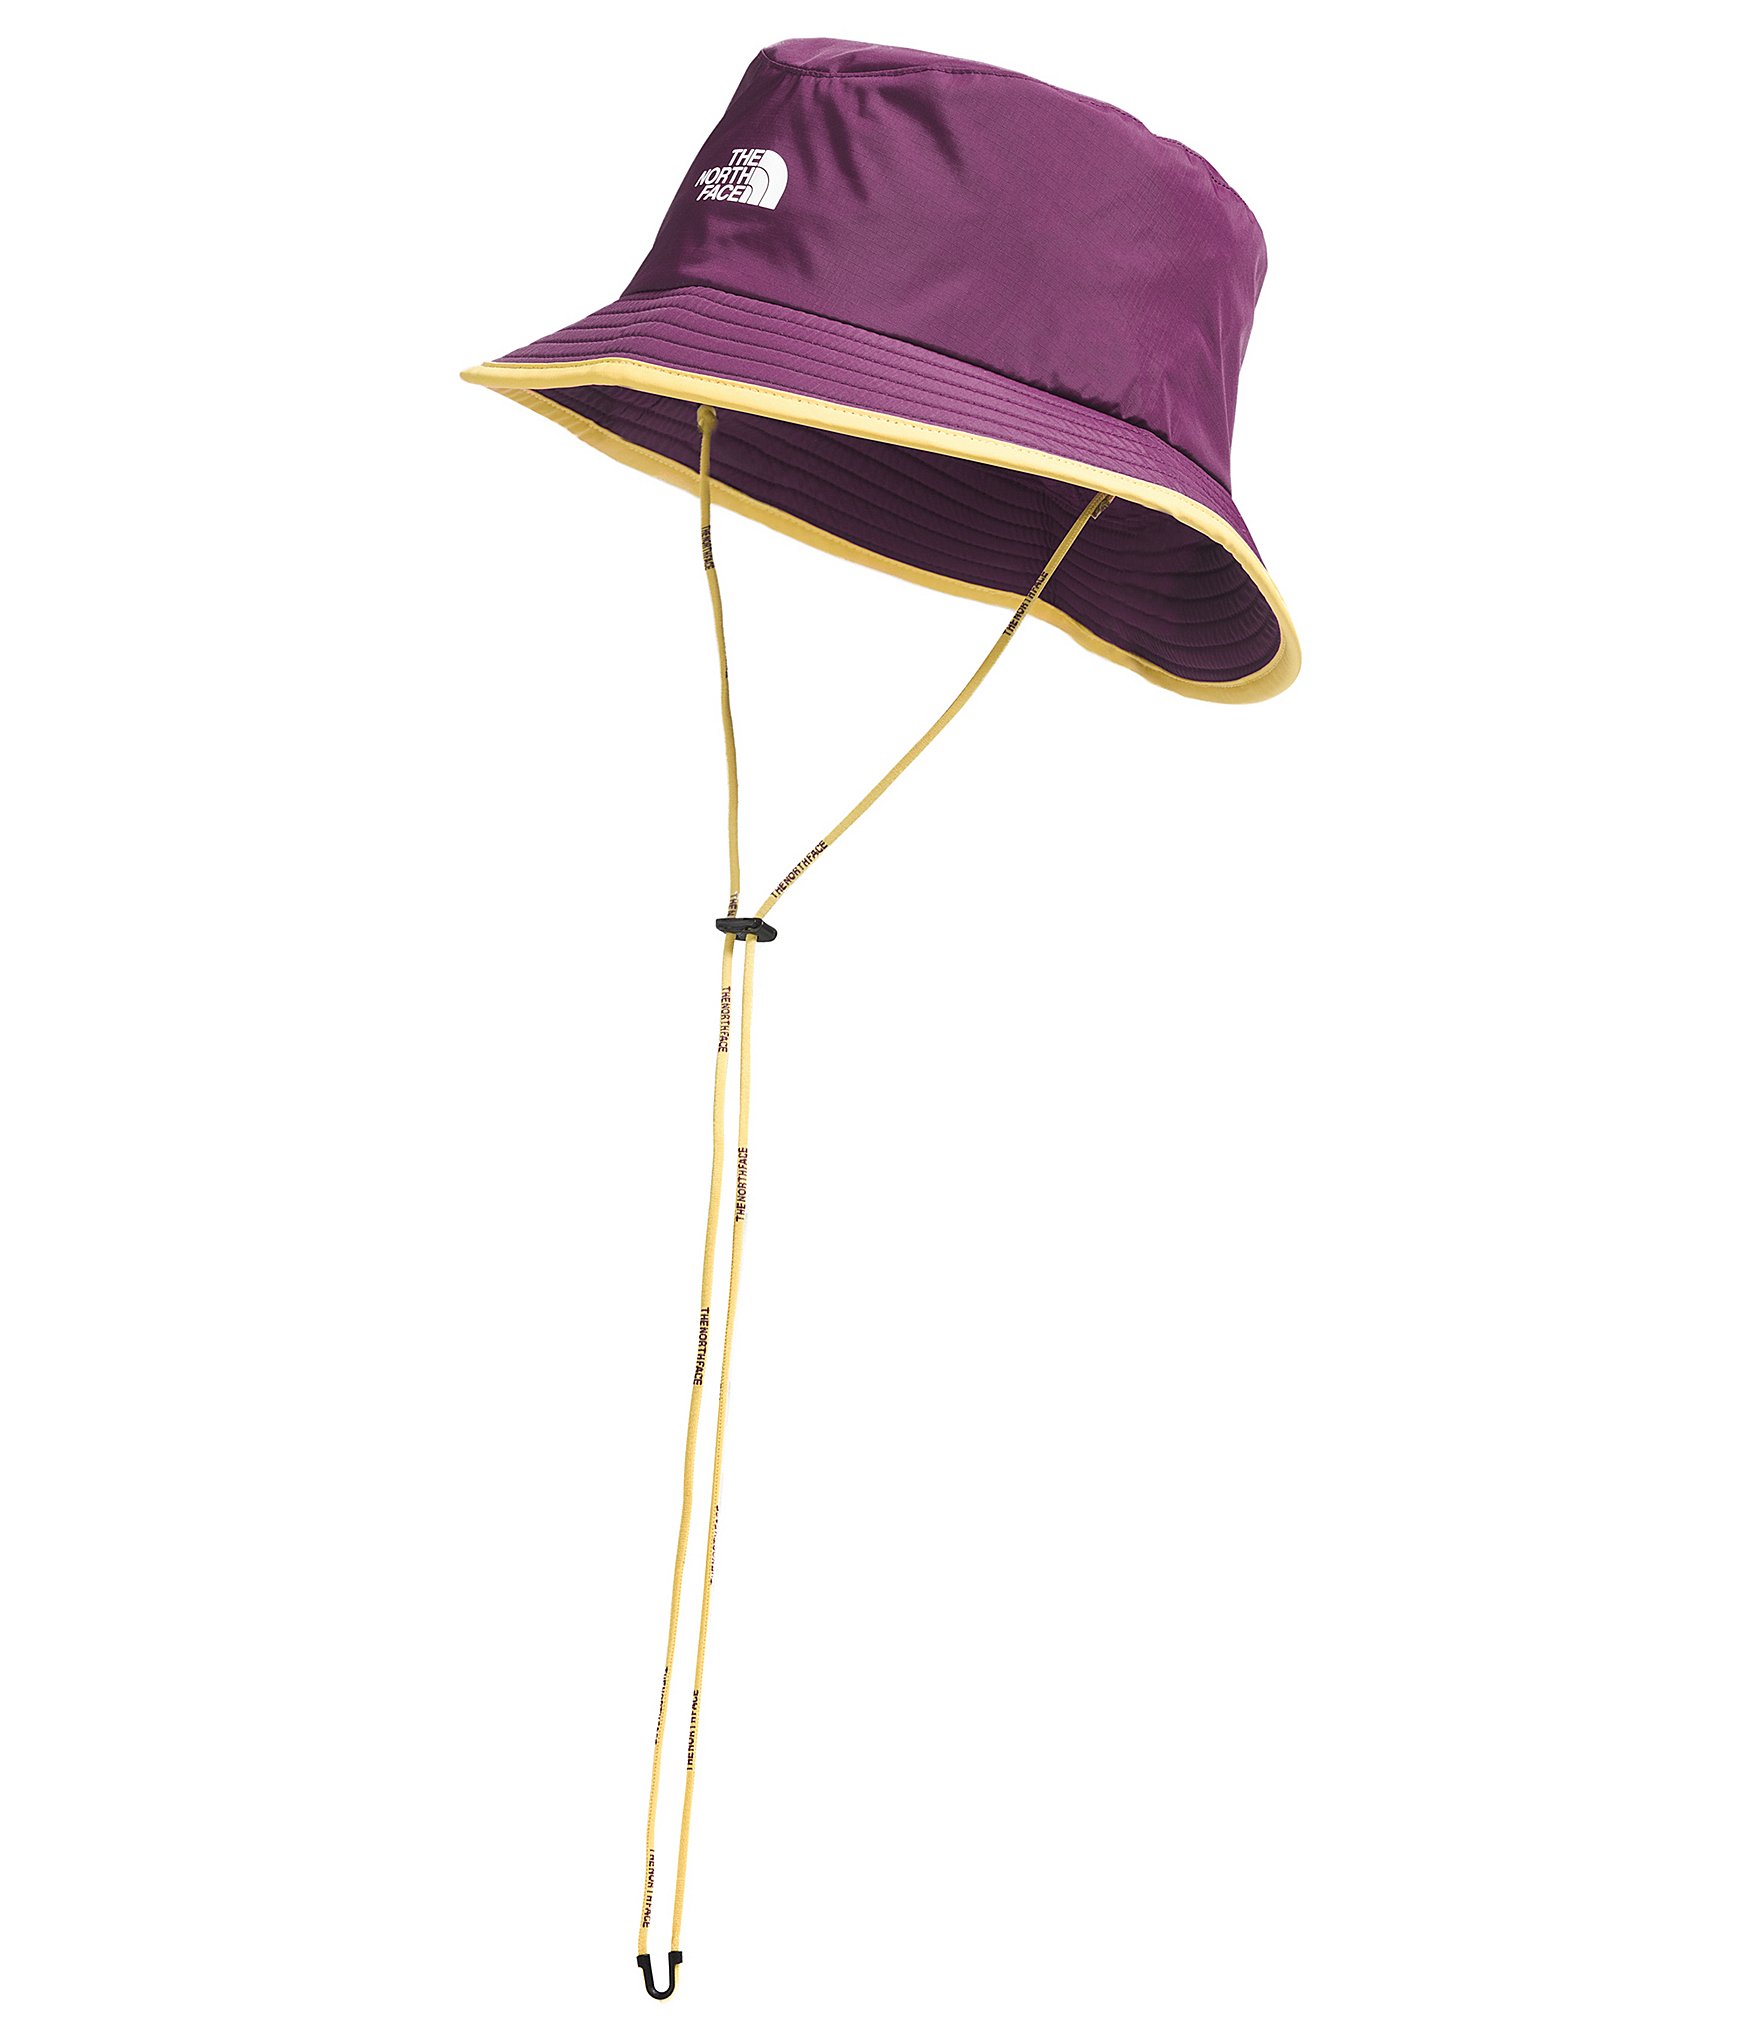 The North Face Antora Rain Bucket Hat Black Currant Purple/Yellow Silt, L/XL